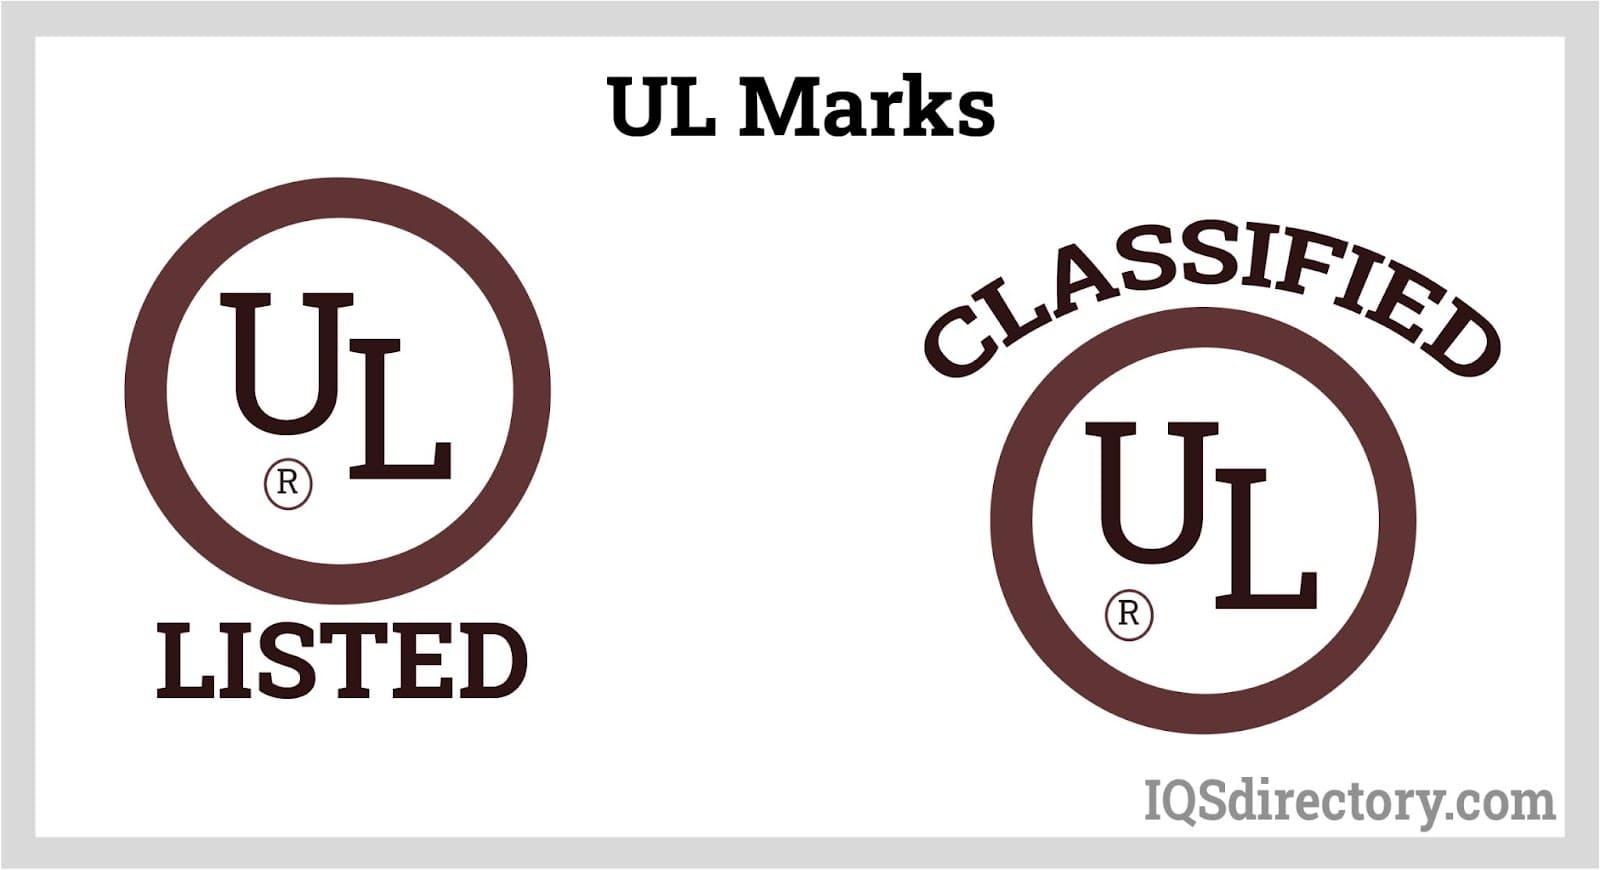 UL Marks